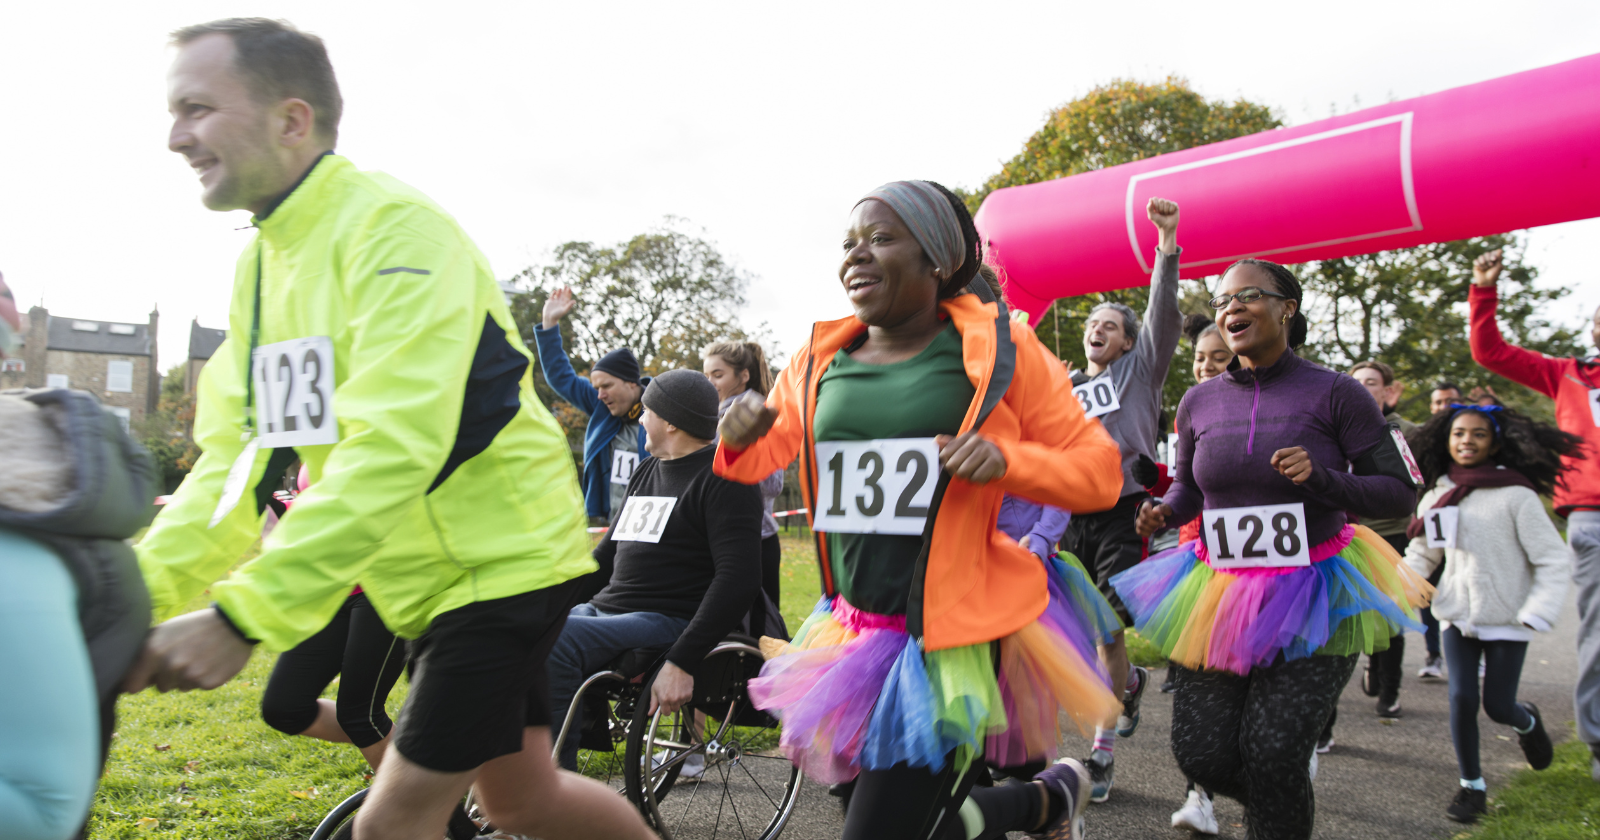 Photo shows people running in charity marathon.